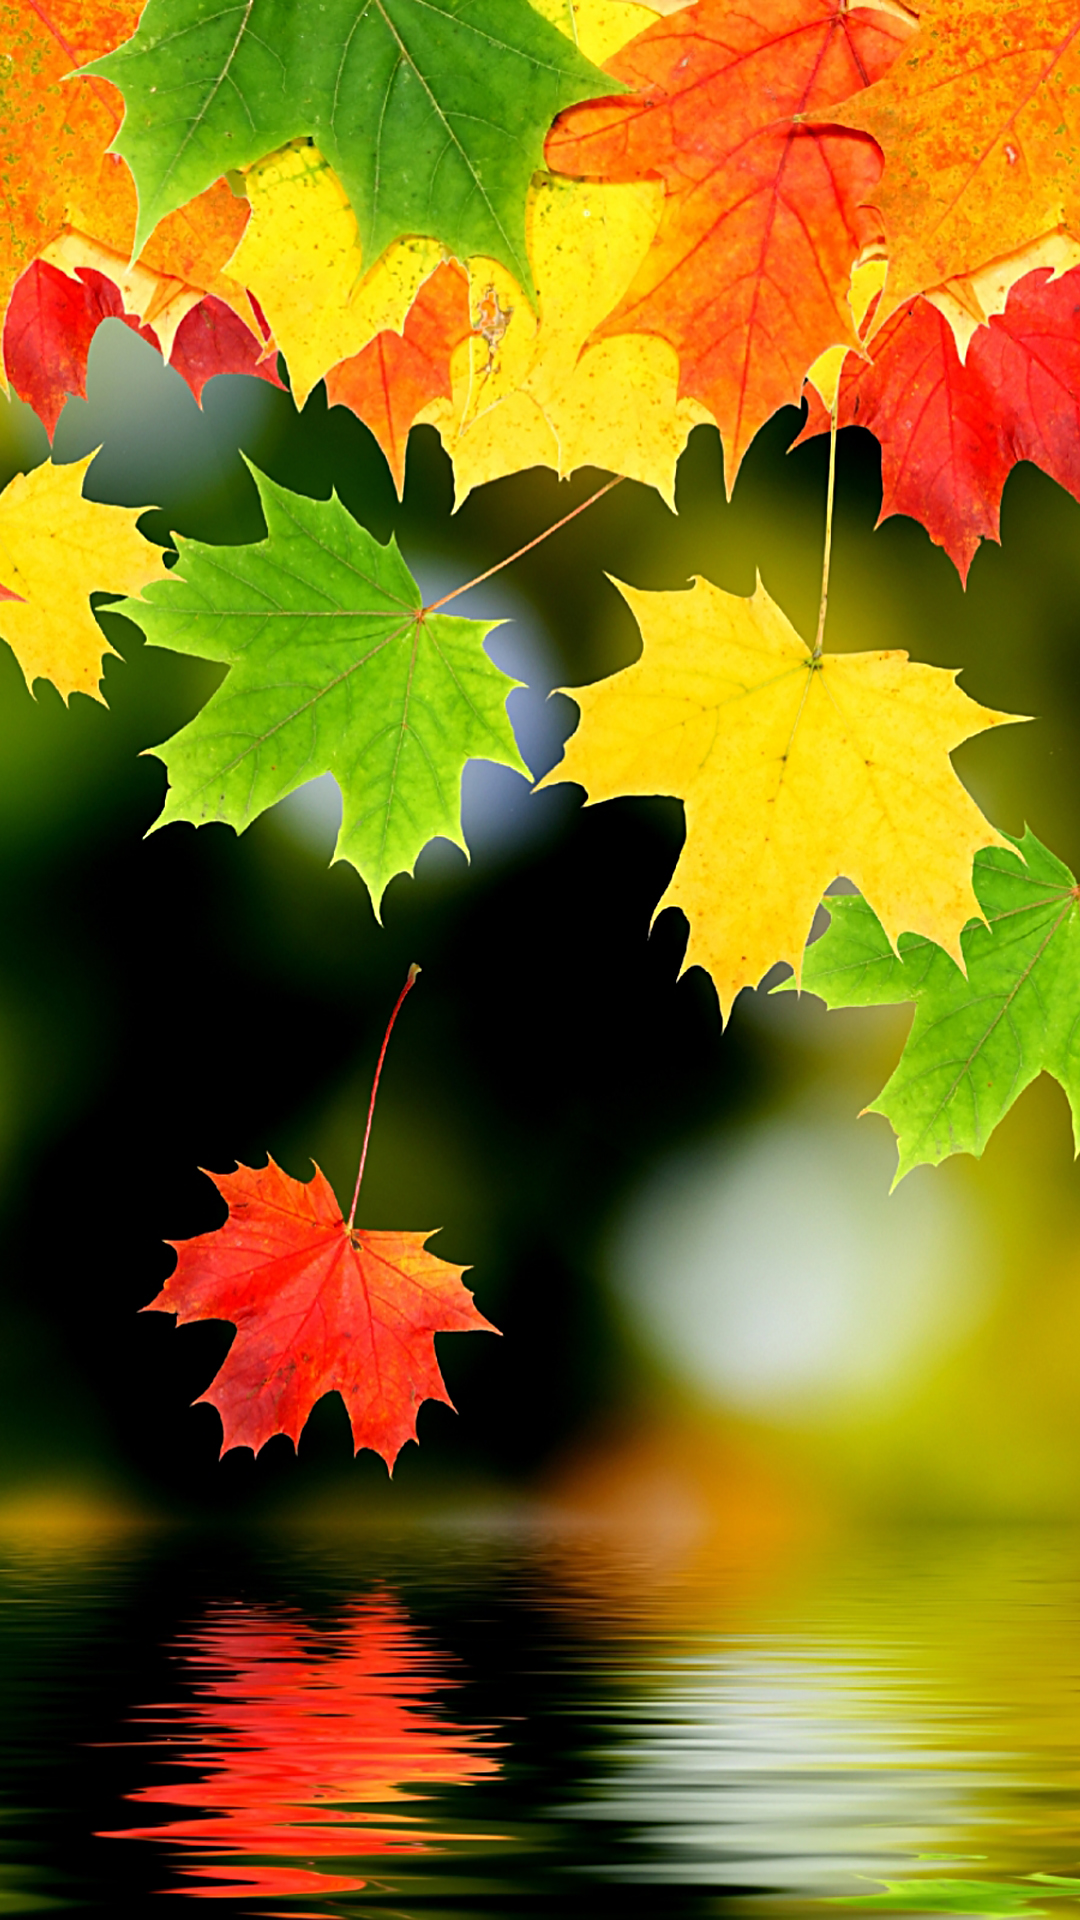 Autumn Leaf Wallpaper - Autumn Leaves Wallpaper Iphone6 - HD Wallpaper 